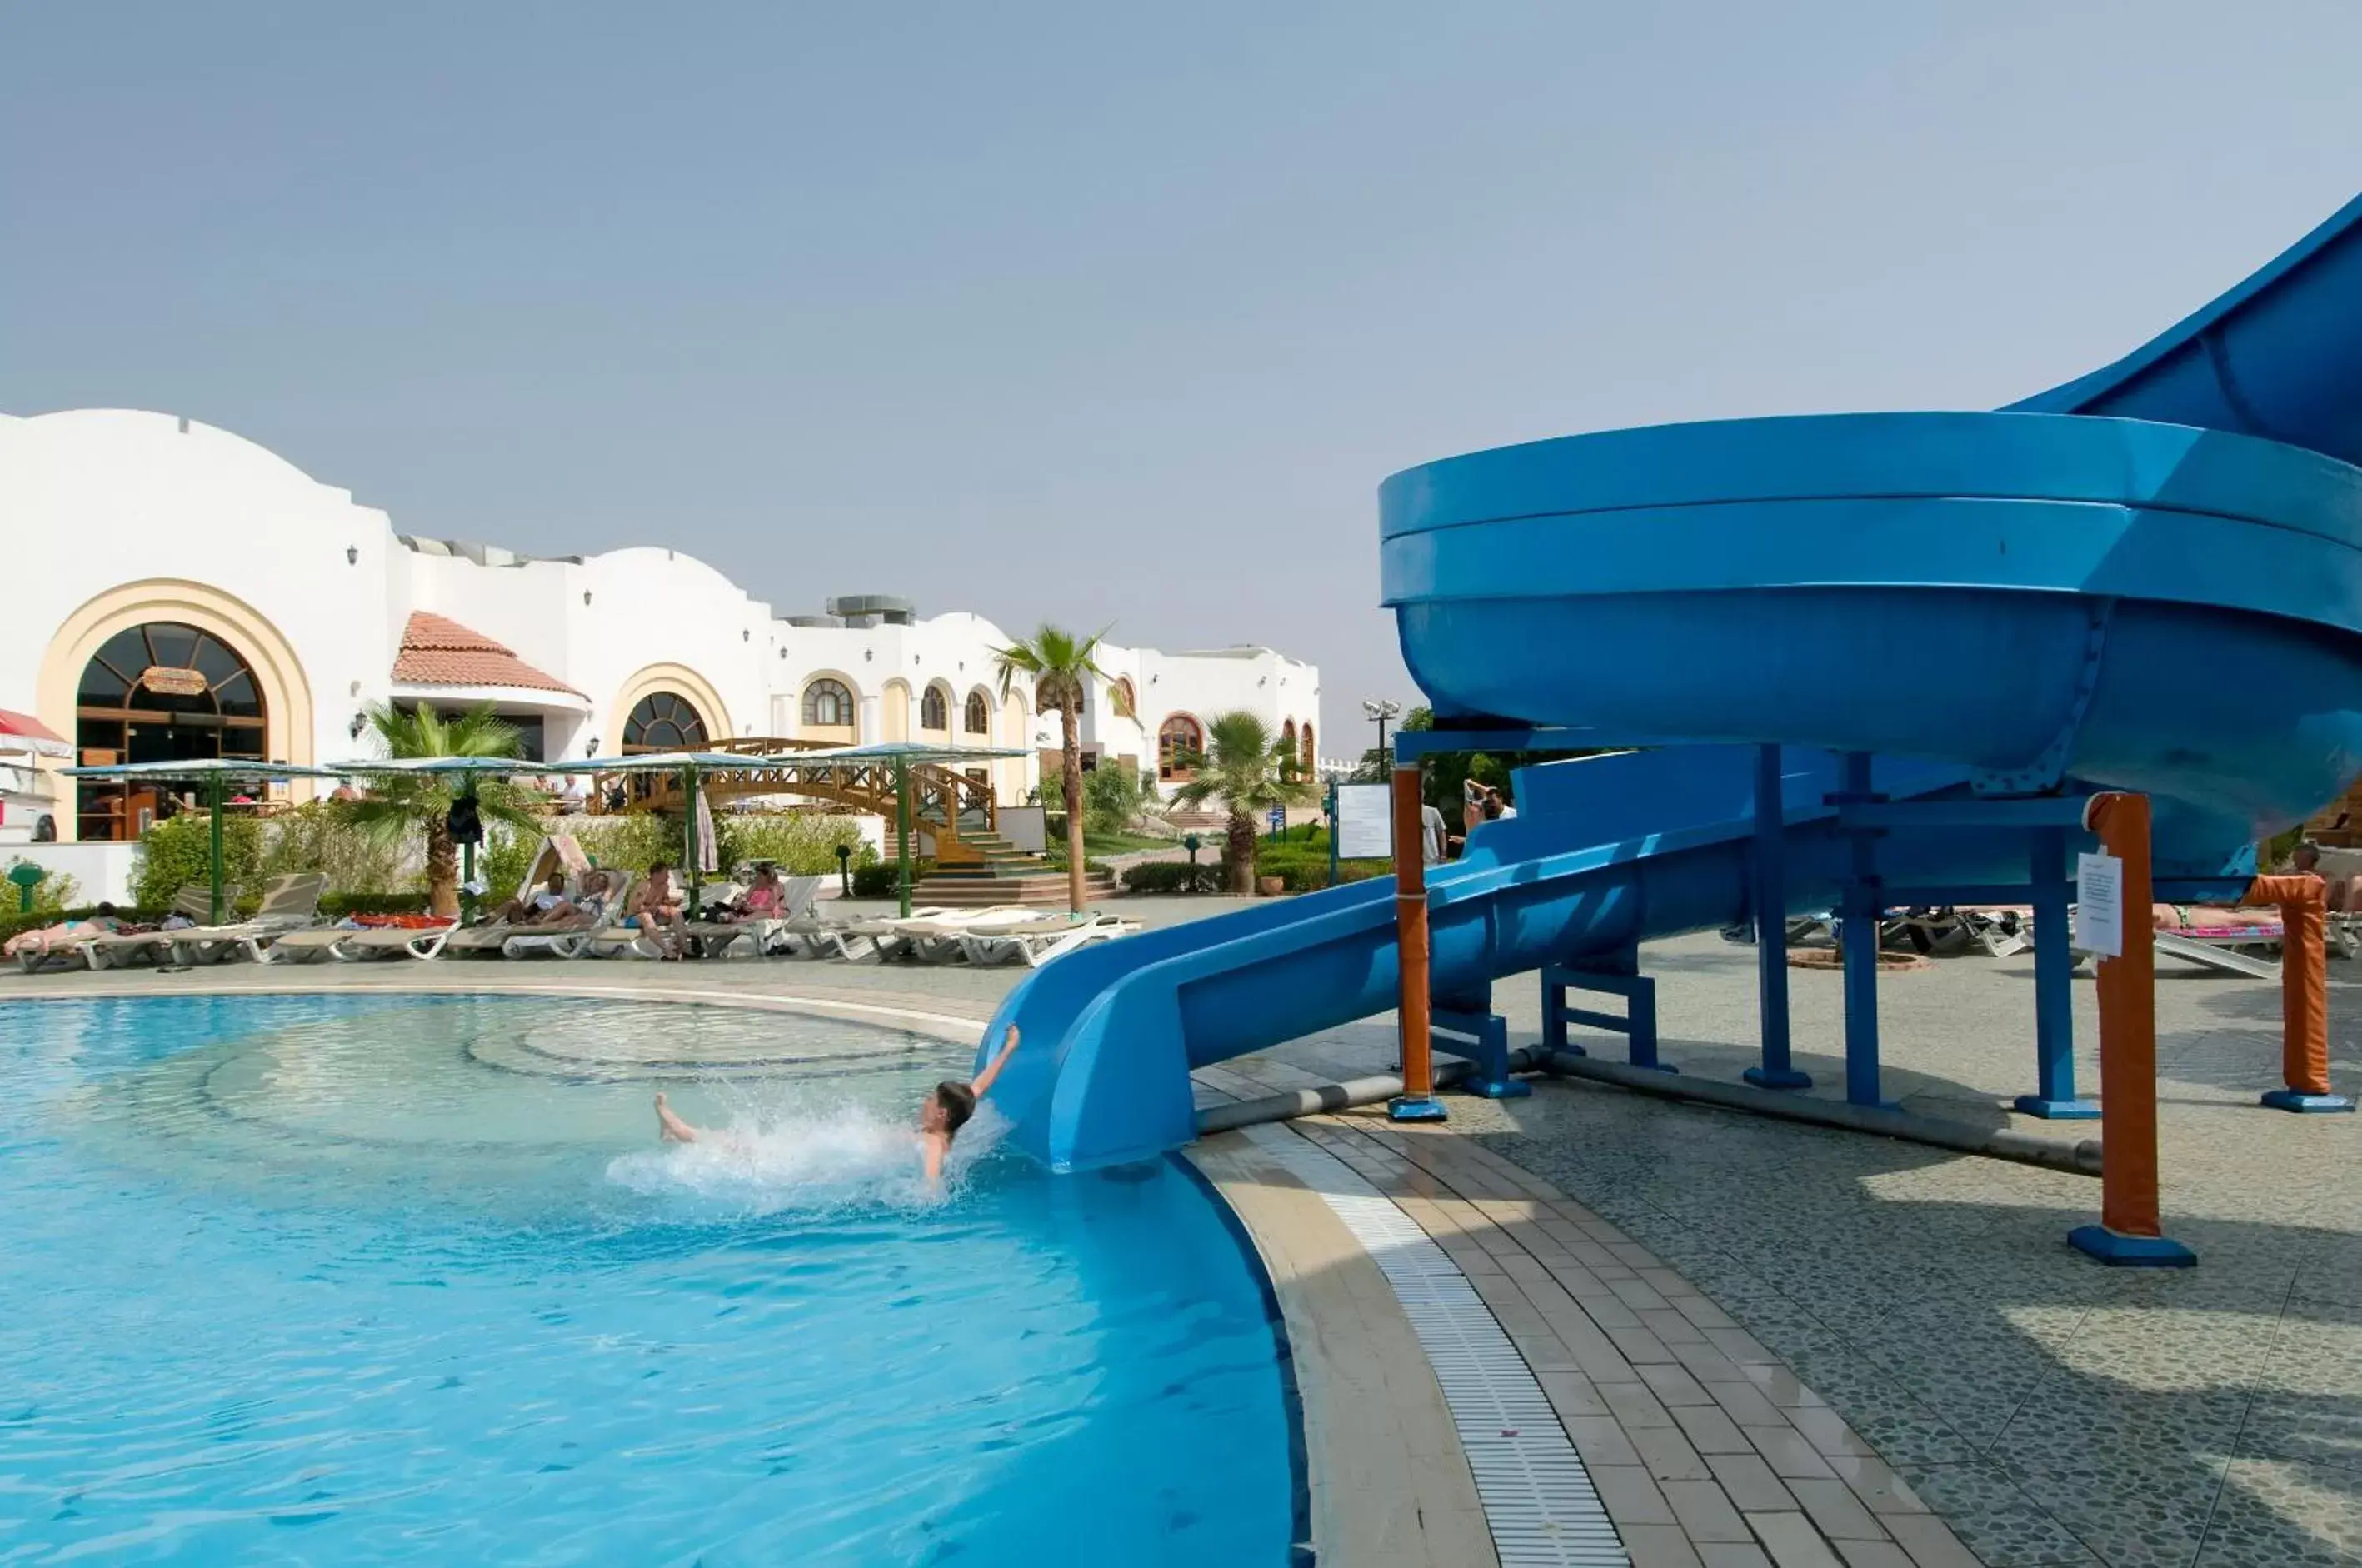 Swimming Pool in Dreams Vacation Resort - Sharm El Sheikh